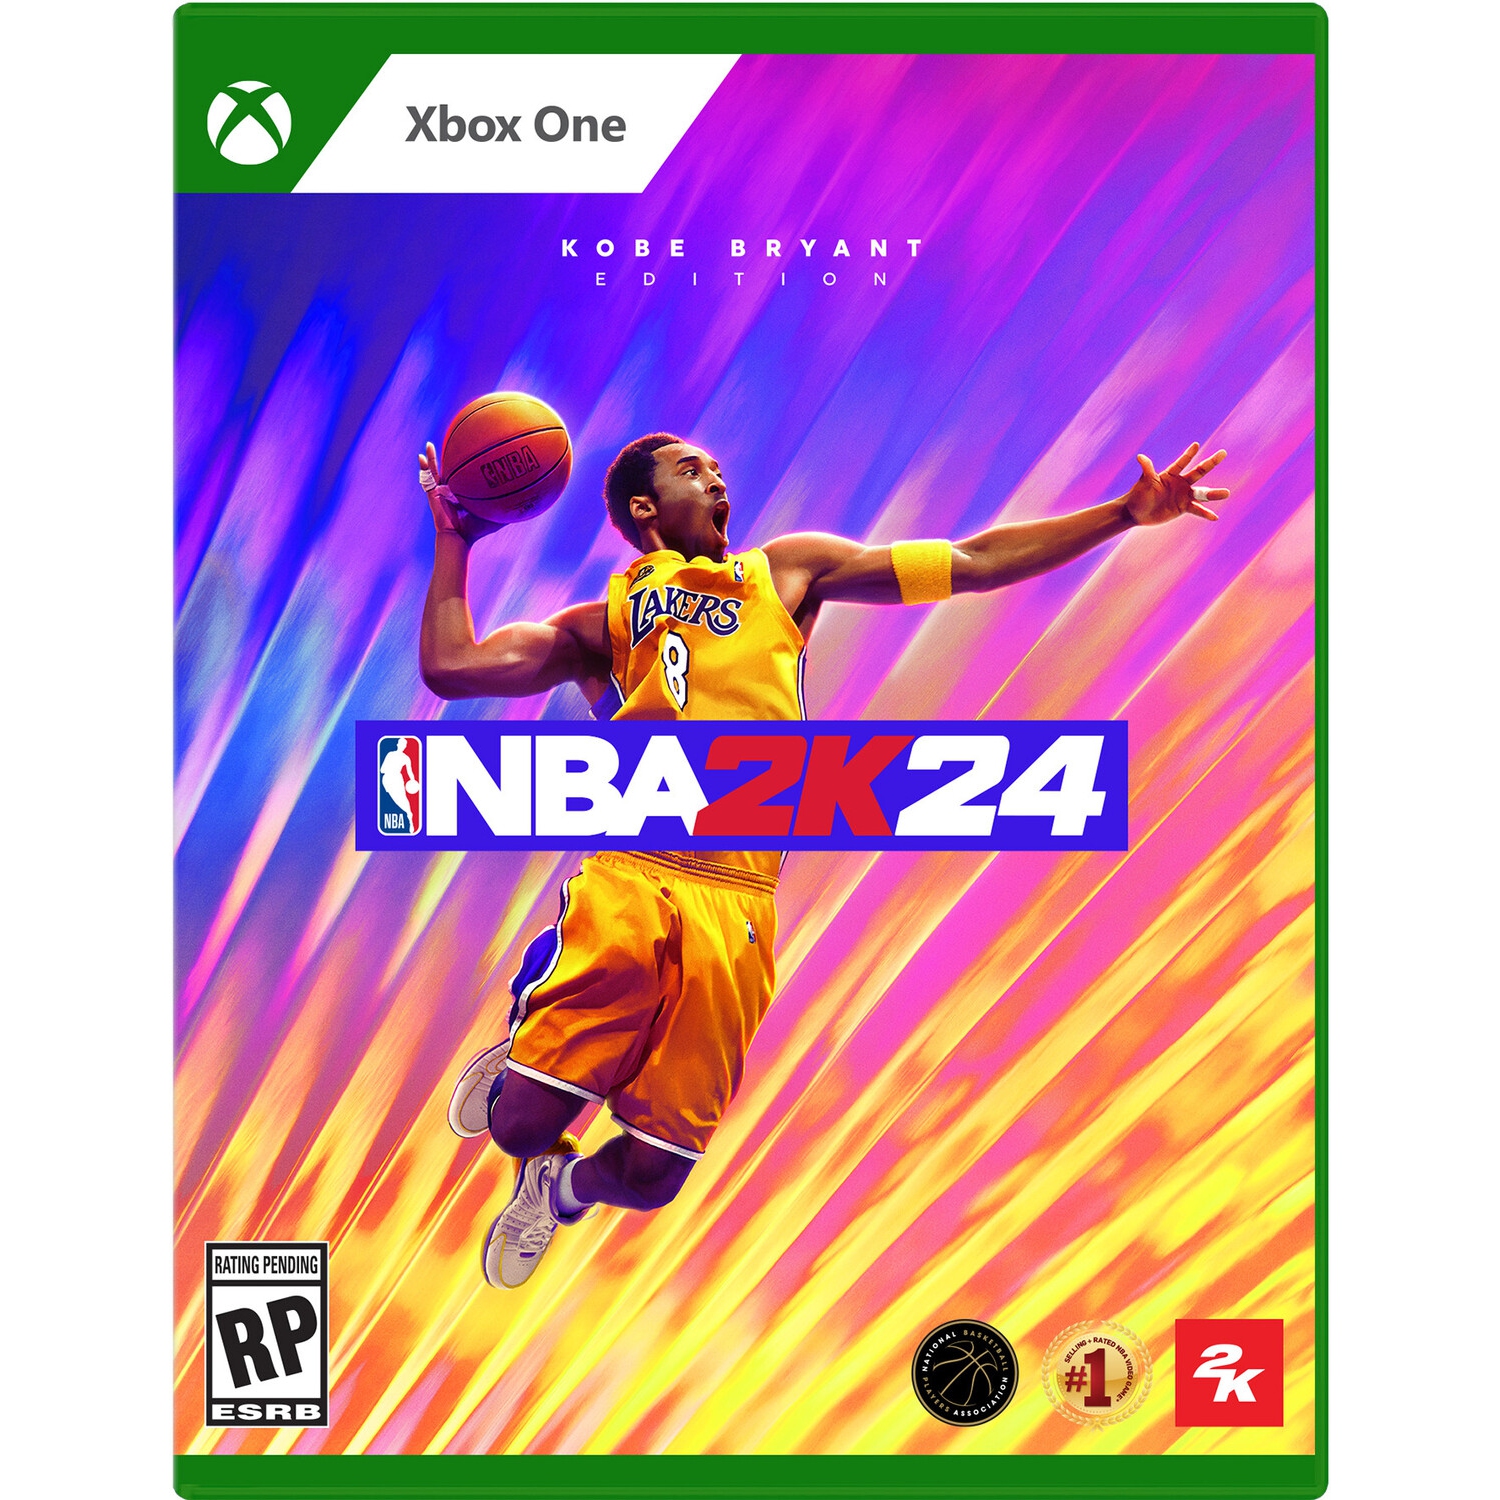 NBA 2K24 Kobe Bryant Edition for Xbox One [VIDEOGAMES]